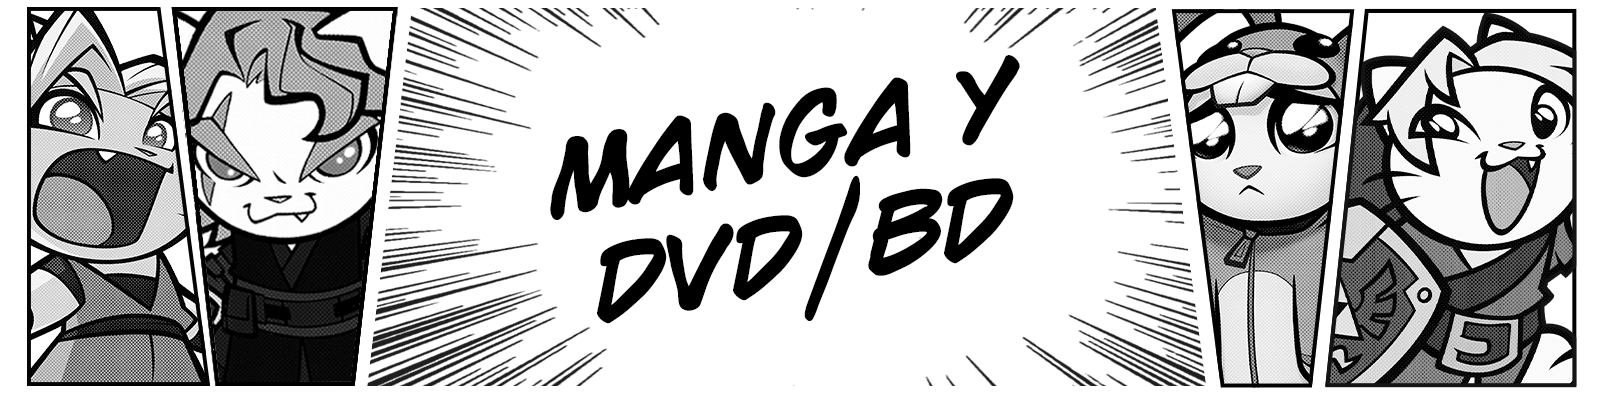 Manga y DVD/BD